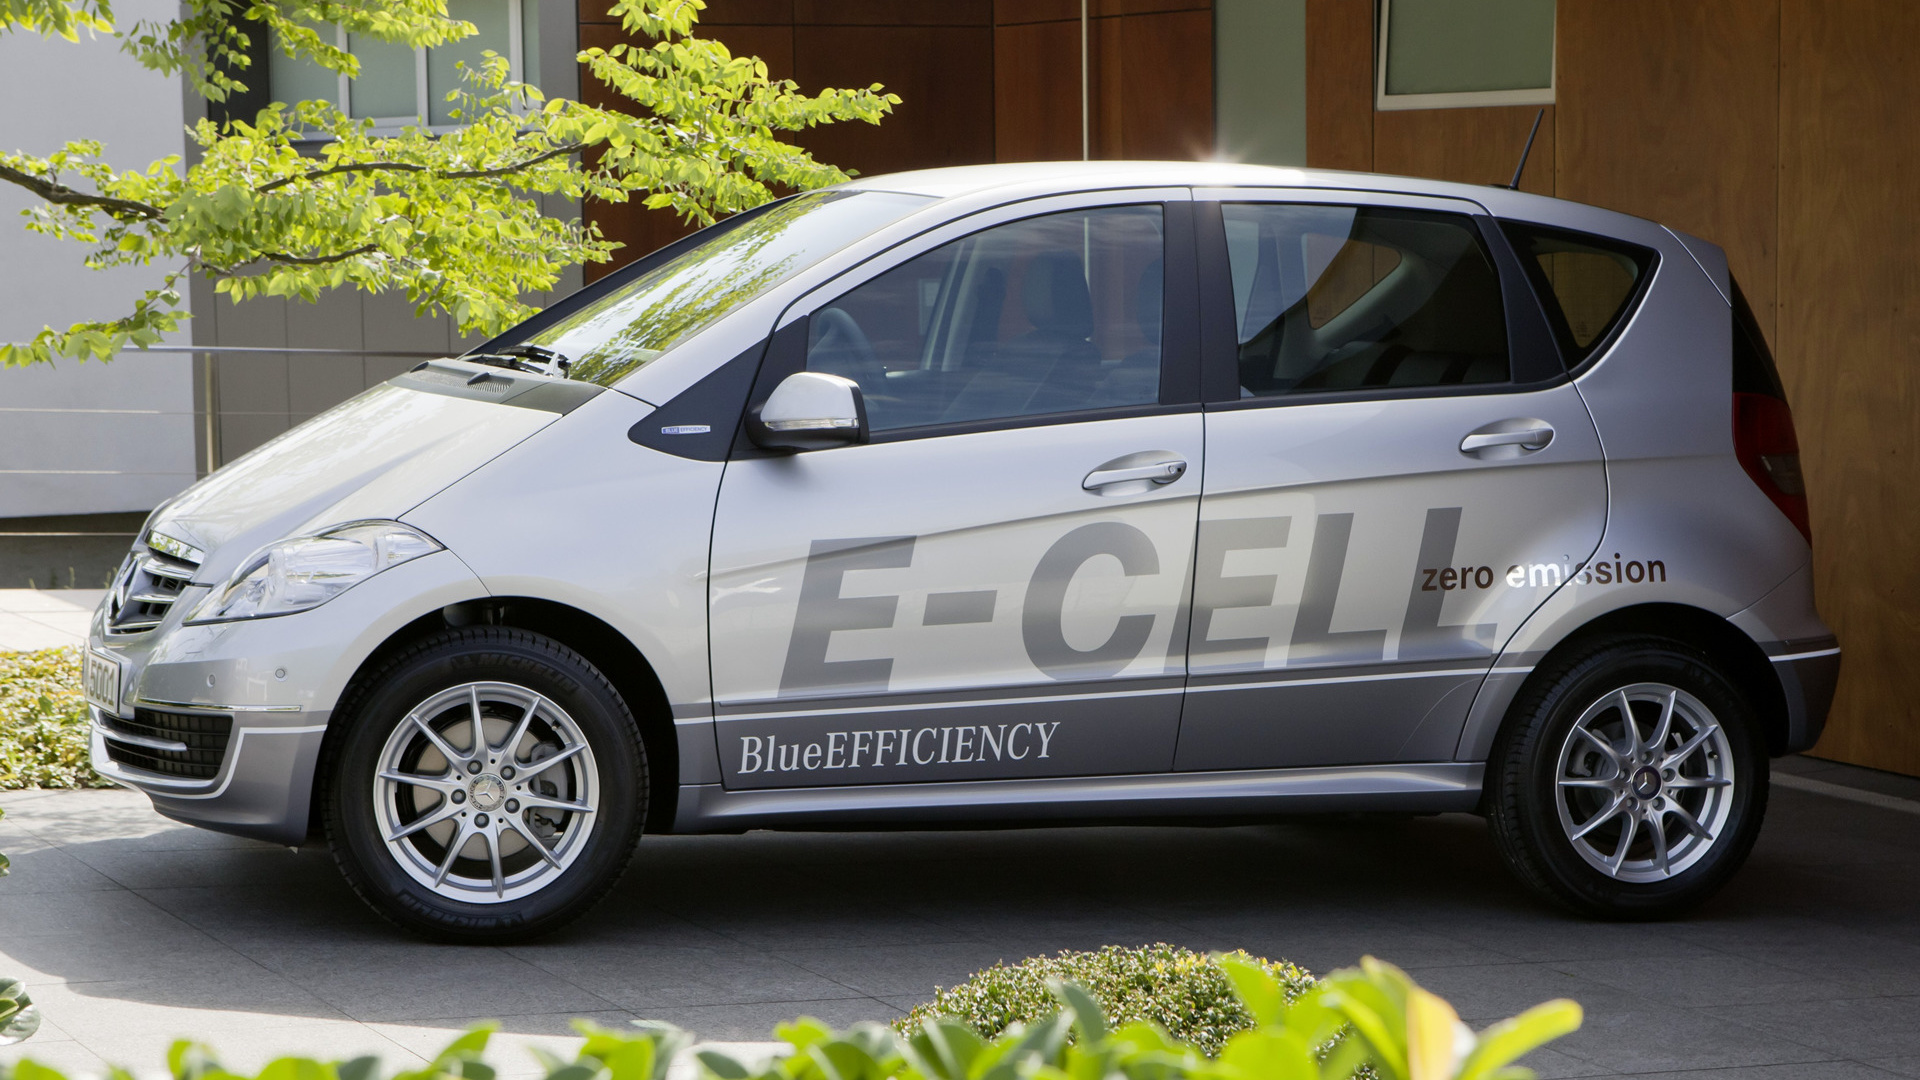 Mercedes-Benz A-Class E-Cell 5-door (2010) Wallpapers and ...